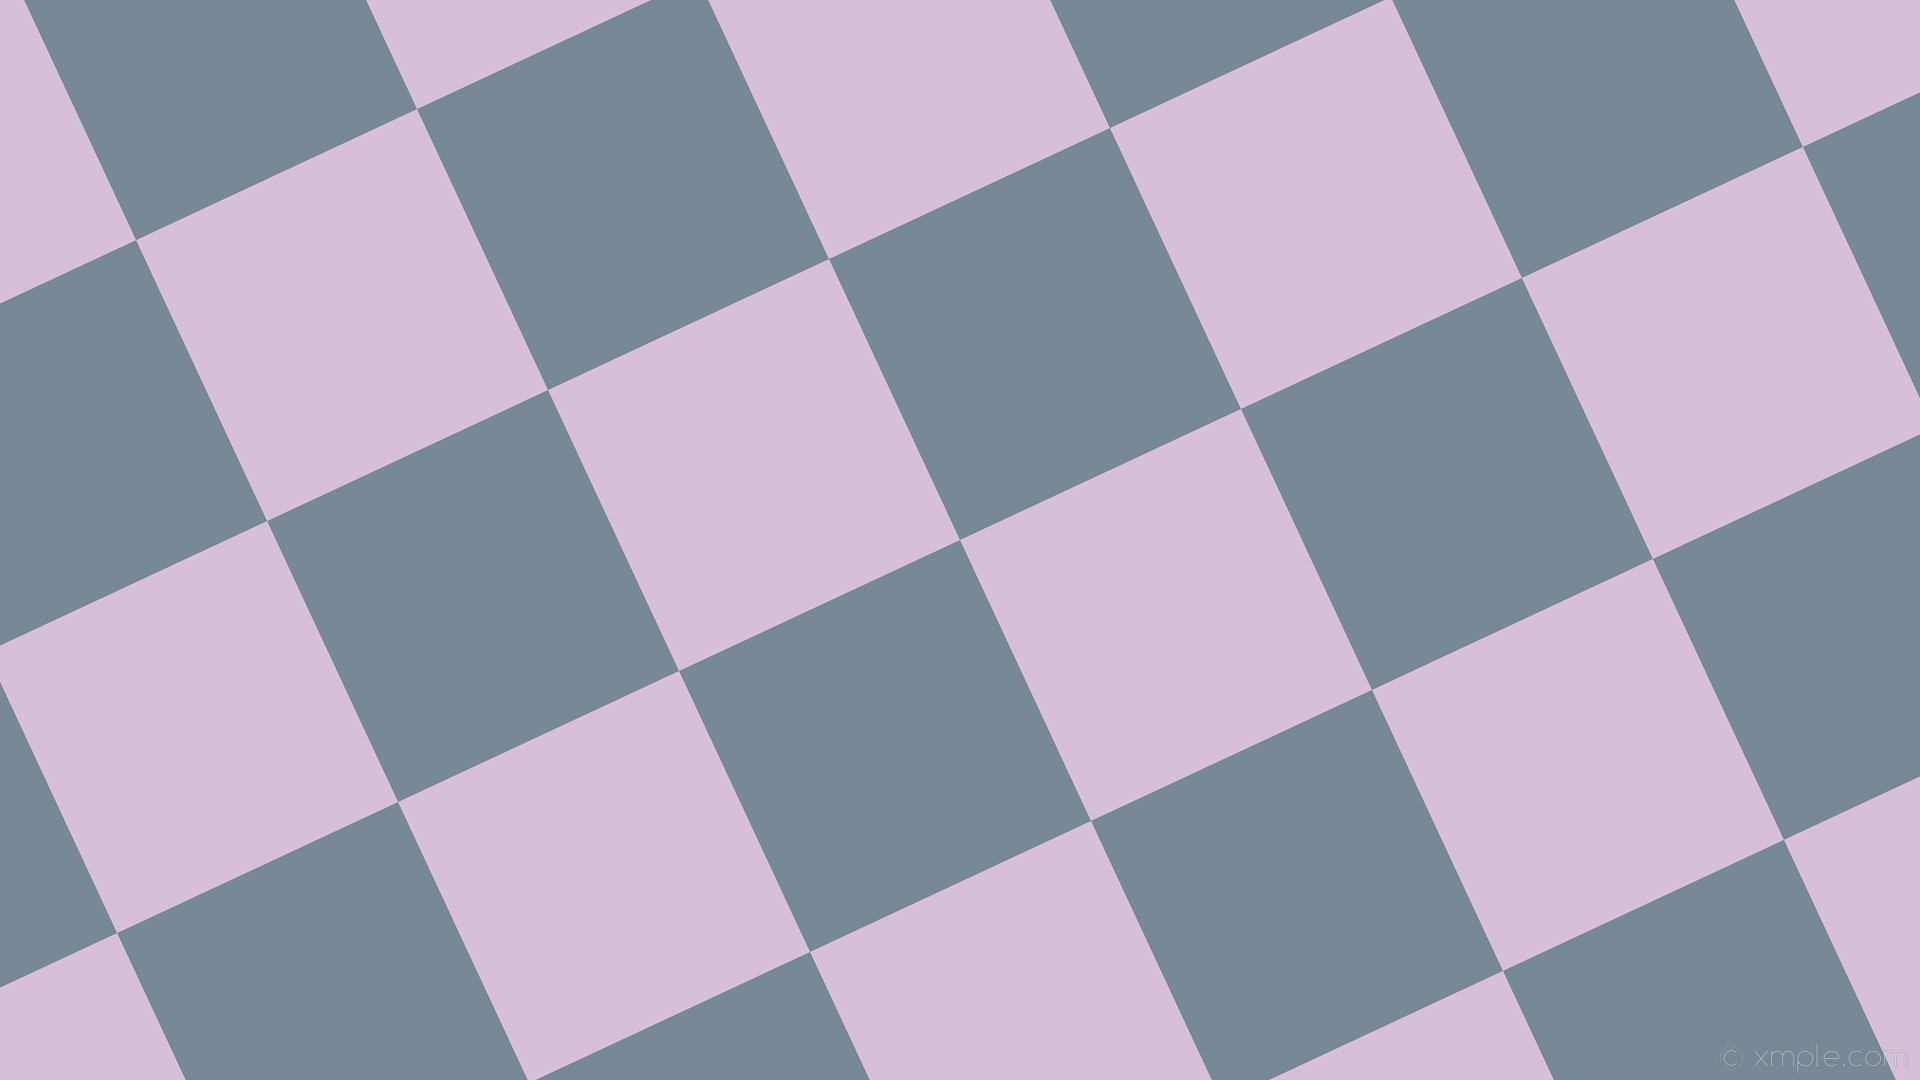 1920x1080 wallpaper checkered purple squares grey thistle light slate gray #d8bfd8  #778899 diagonal 25Â°